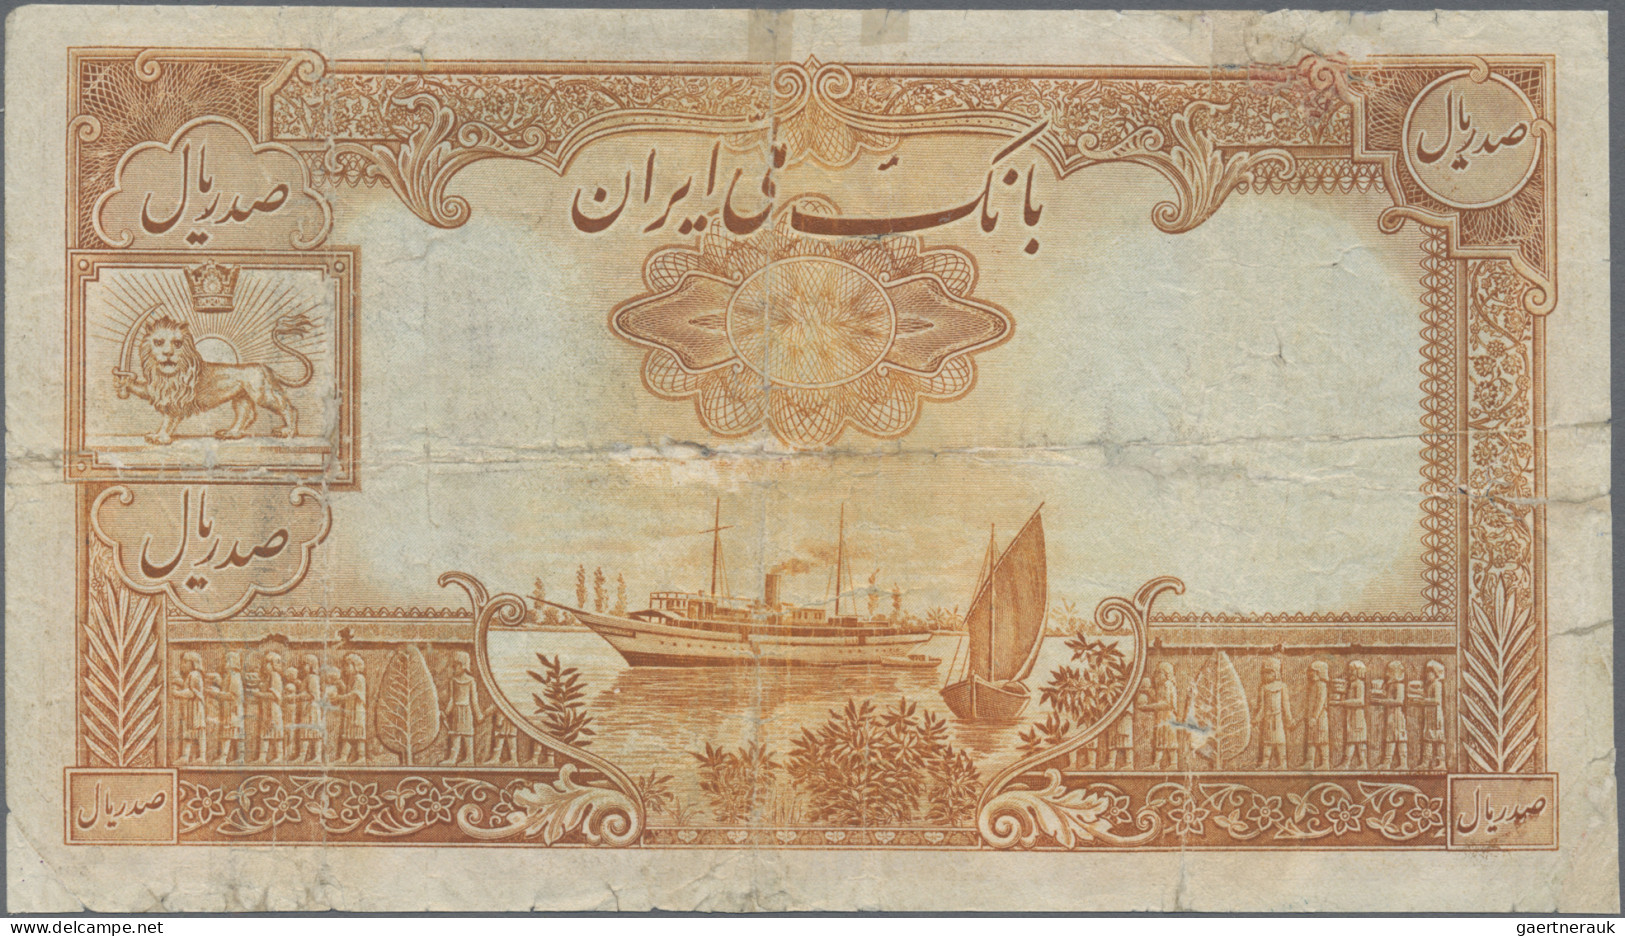 Iran: Bank Melli Iran, set with 5 banknotes, series ND(1944), with 5 Rials (P.39